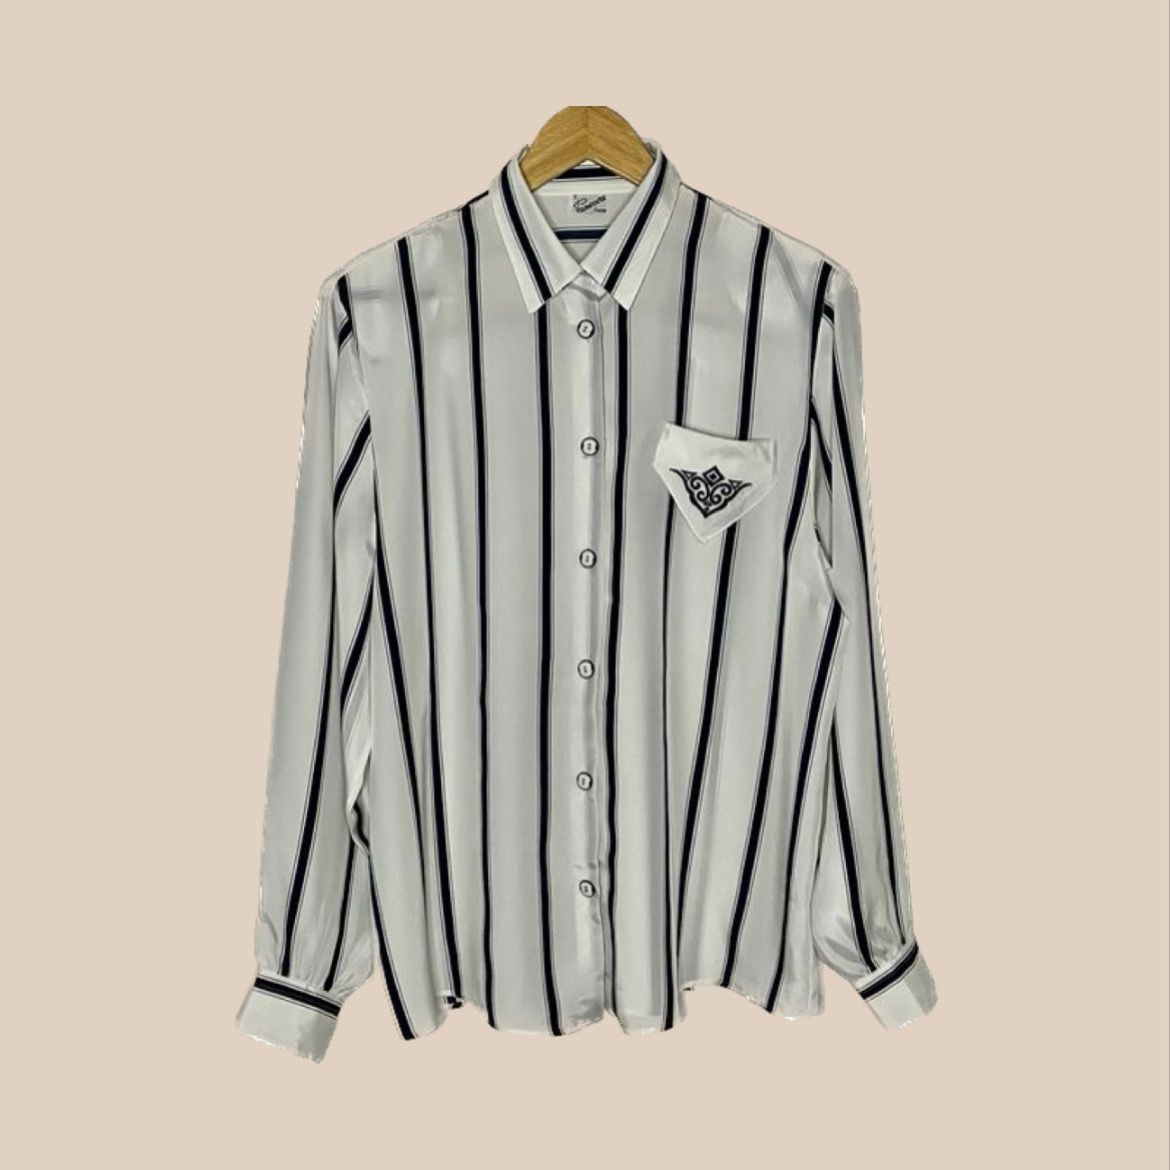 Vintage striped shirt